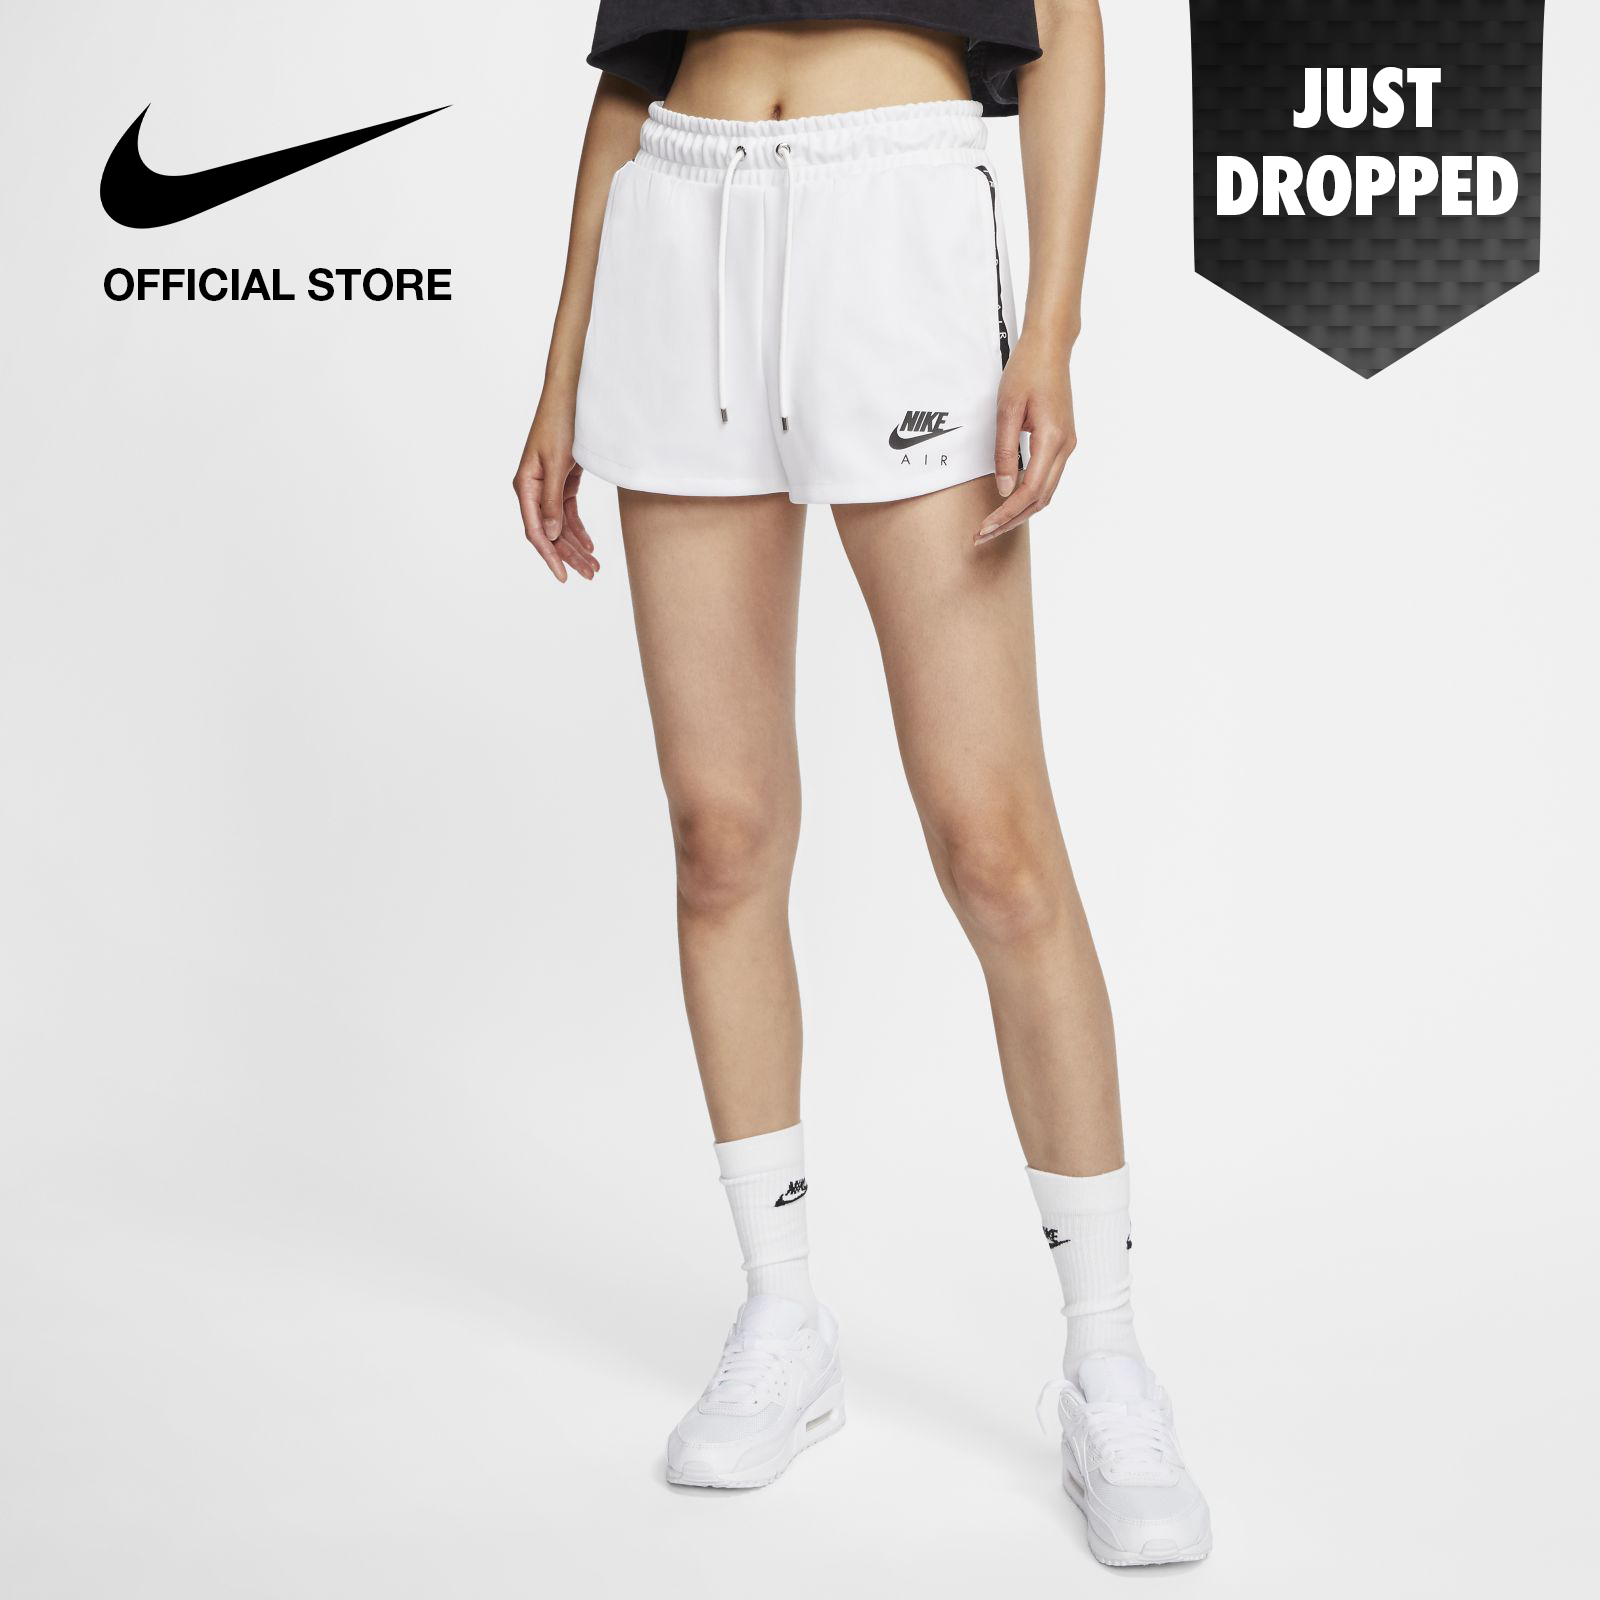 Nike Women's Sportswear Shorts - White